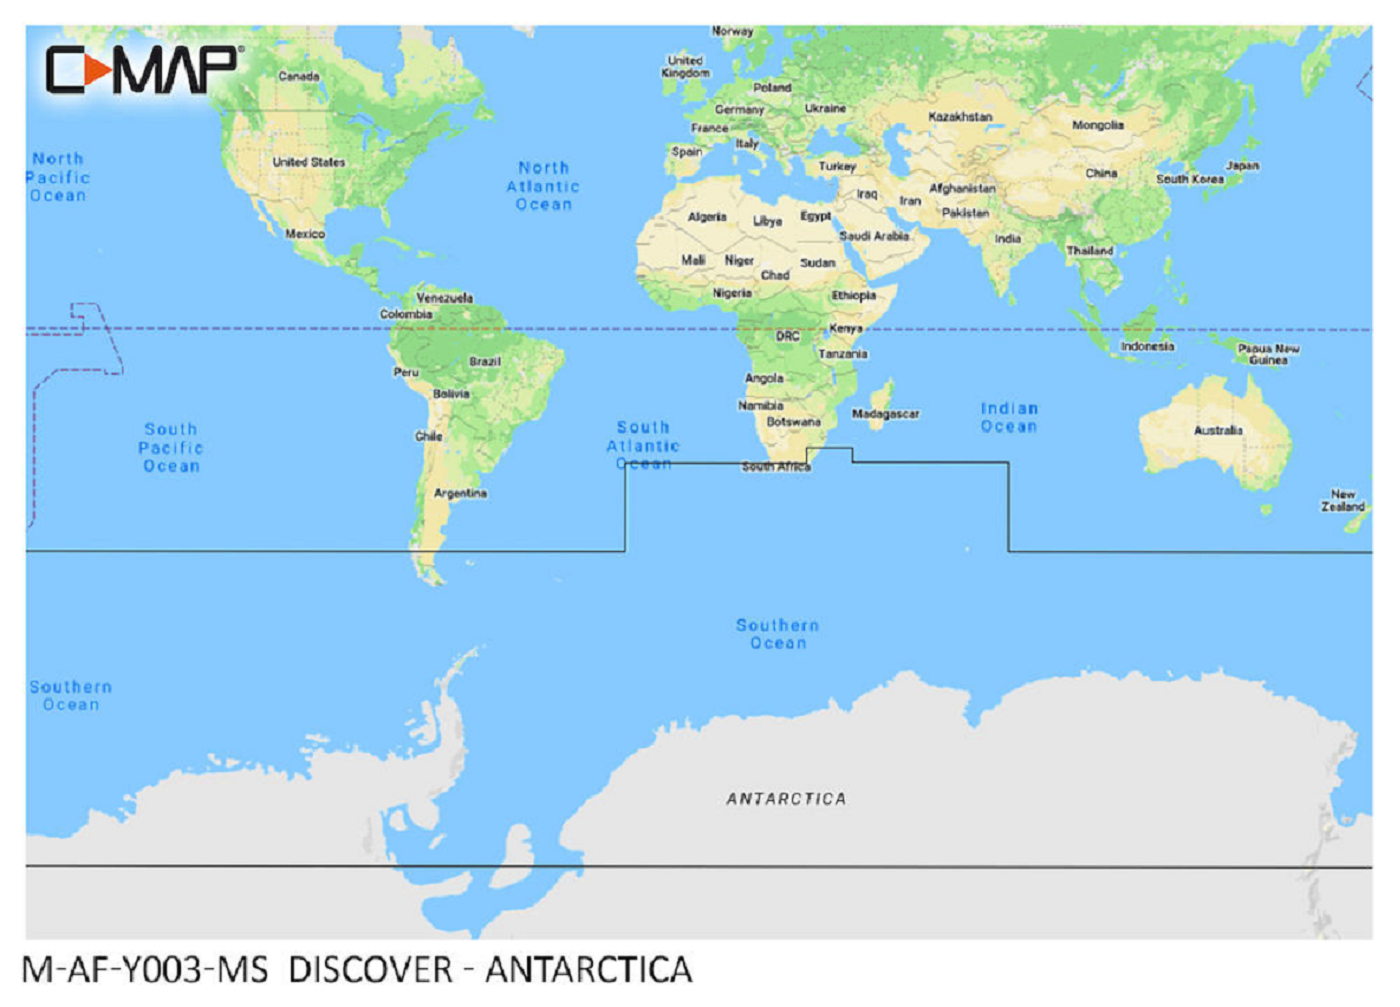 C-MAP Discover Antarctica M-AF-Y003